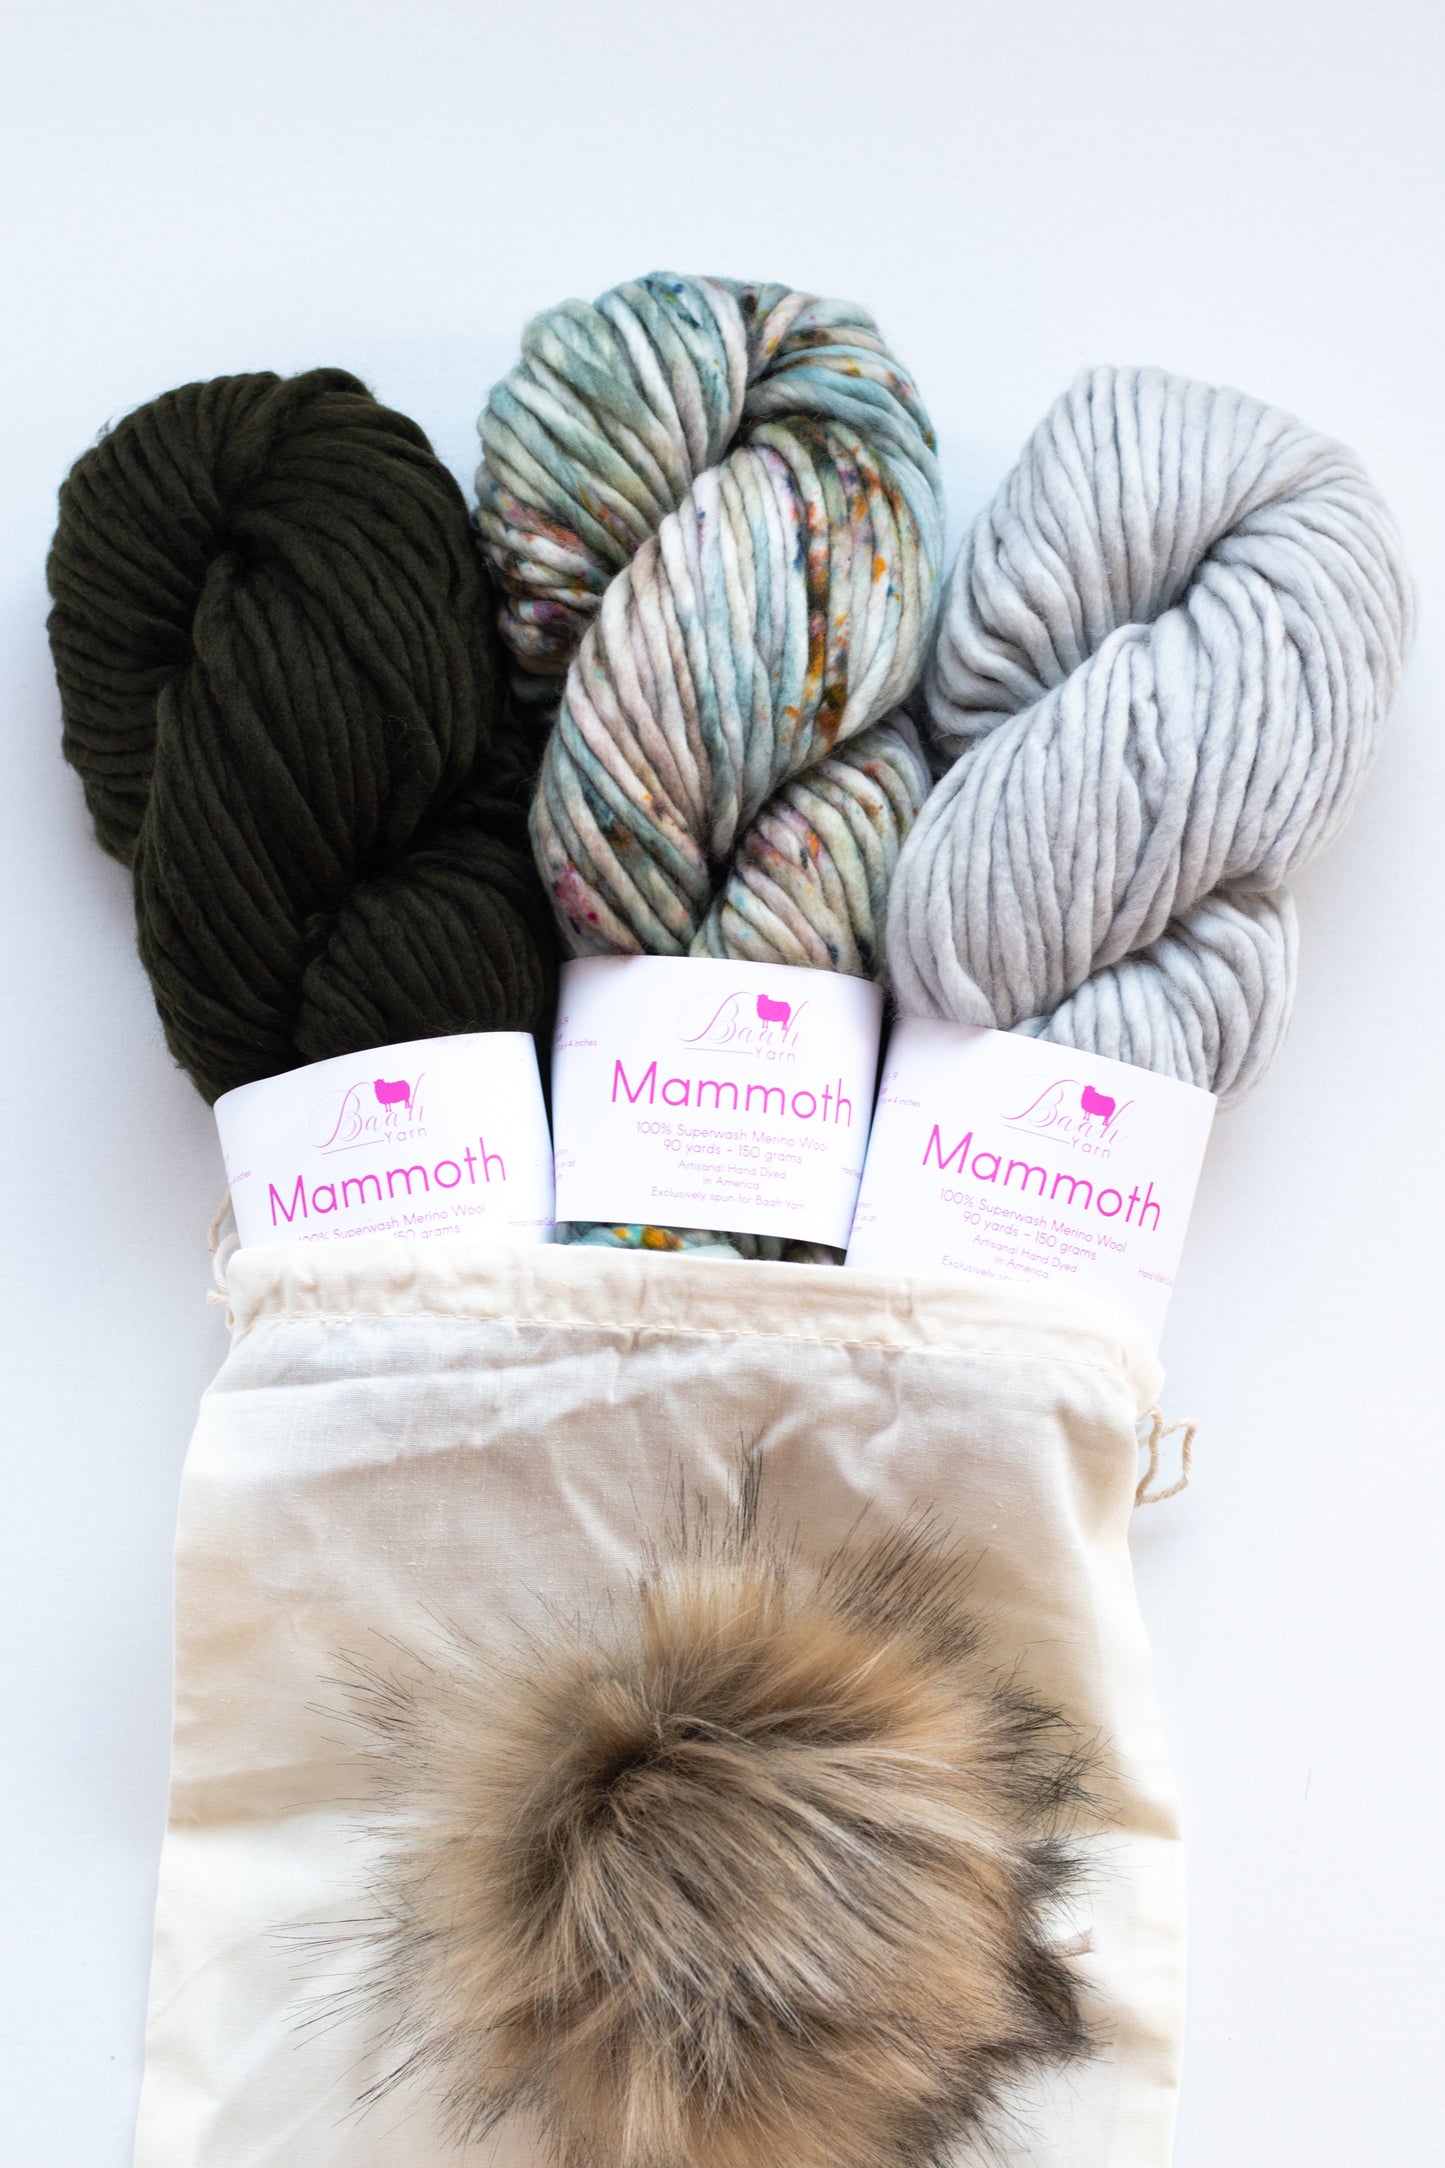 Sunrise Pattern Knitting Kit with Baah Yarn Mammoth, Super Bulky Yarn Knitting Kit